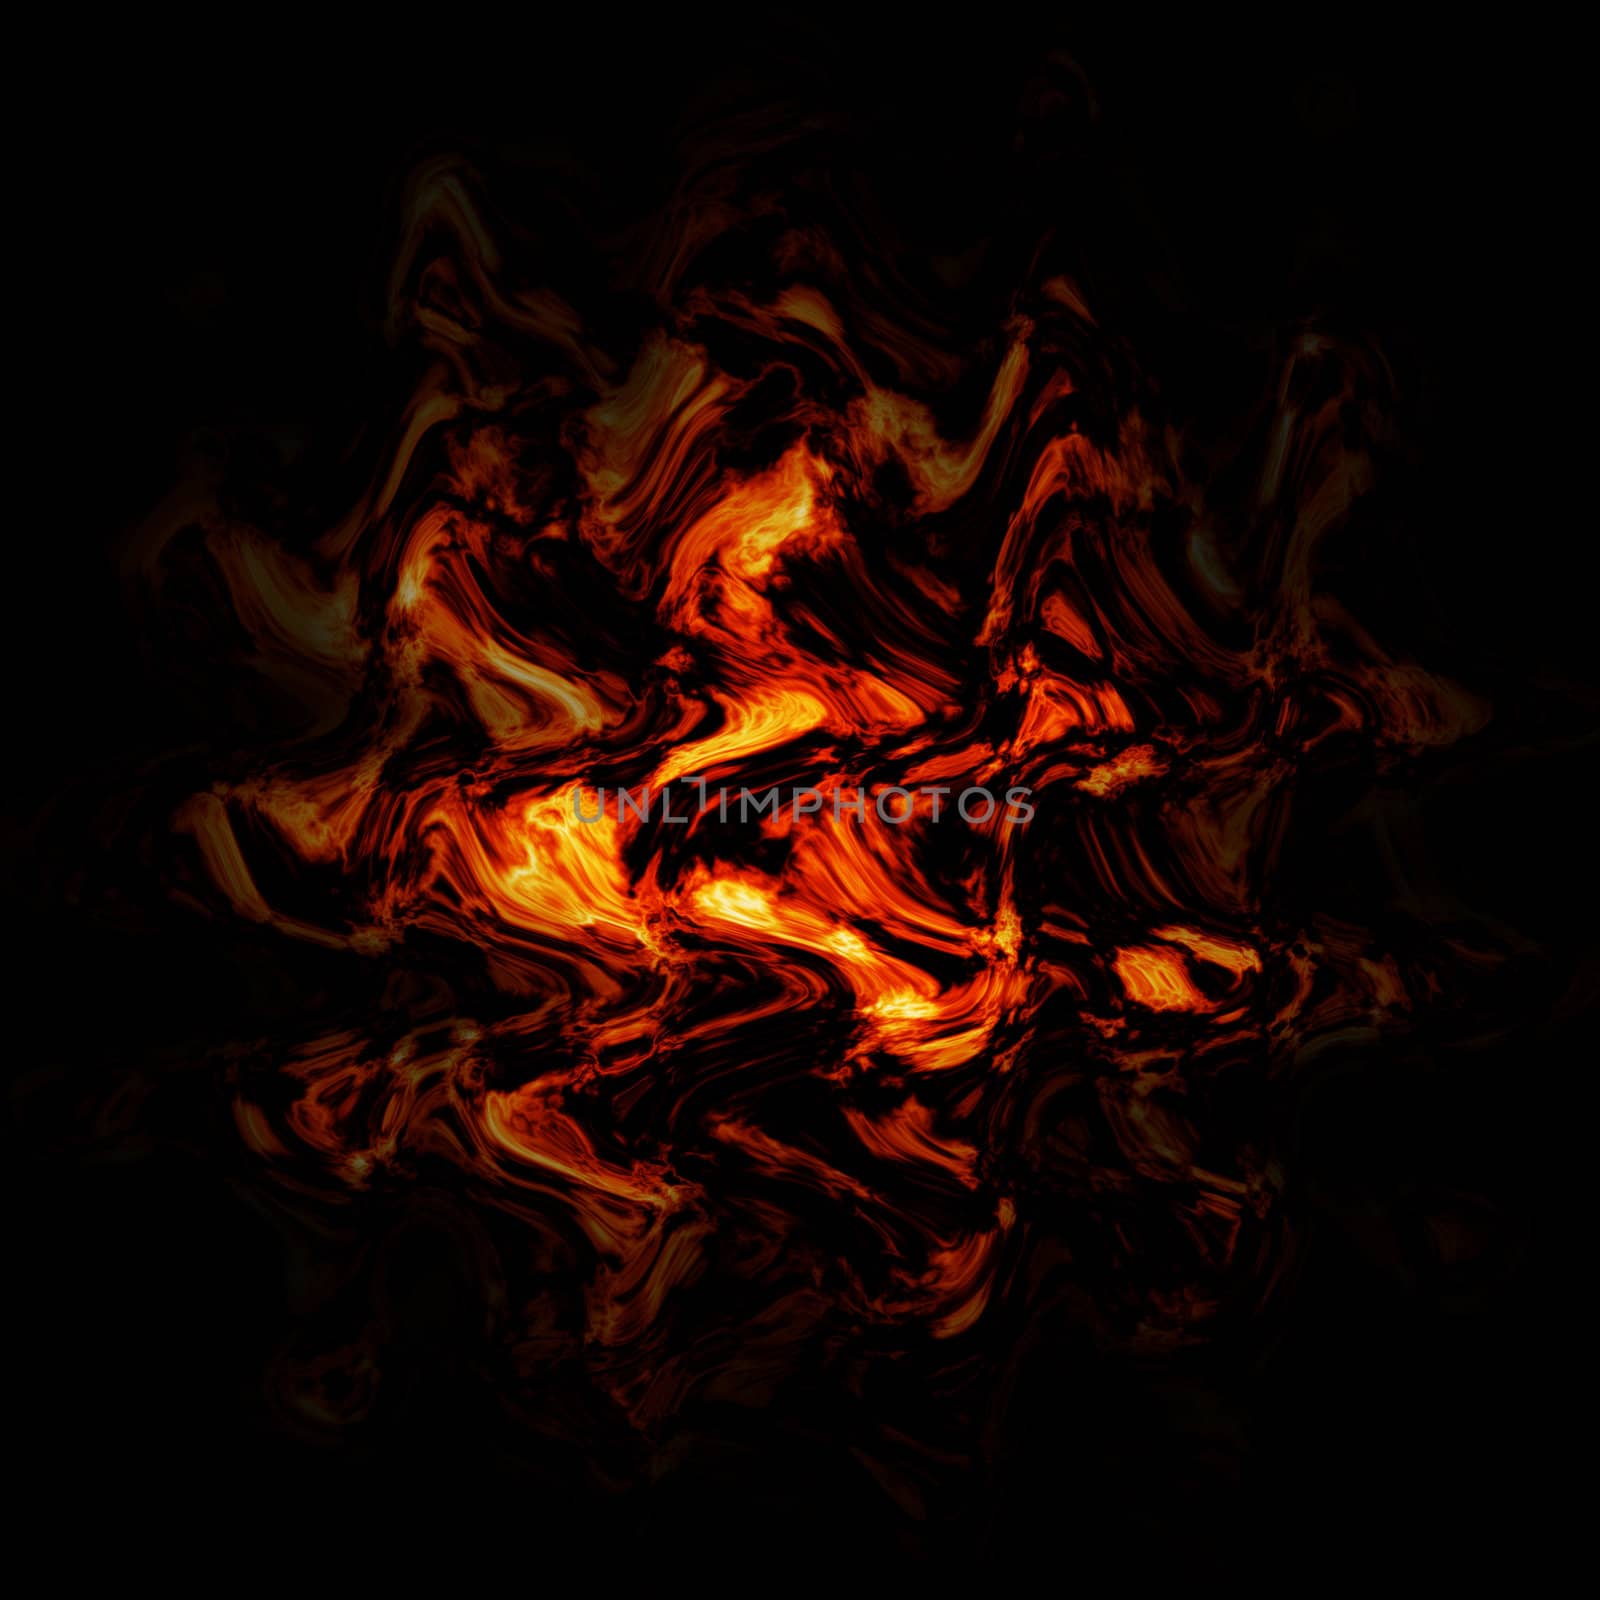 the burning reflection on the black background